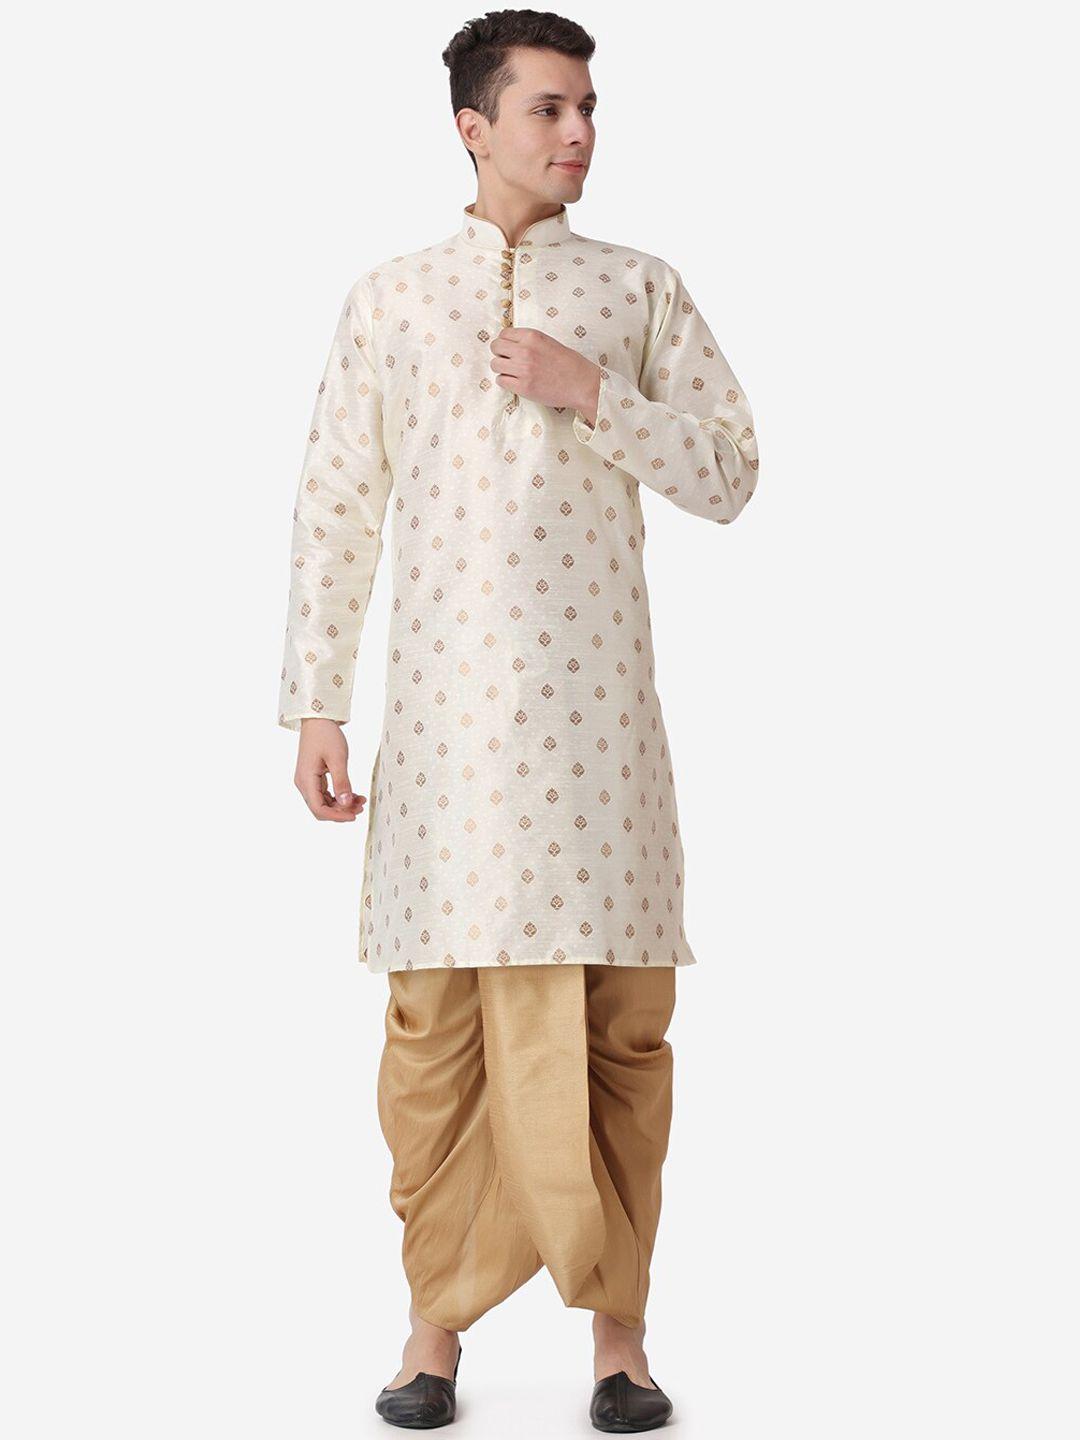 royal kurta ethnic motifs woven design straight kurta with dhoti pants